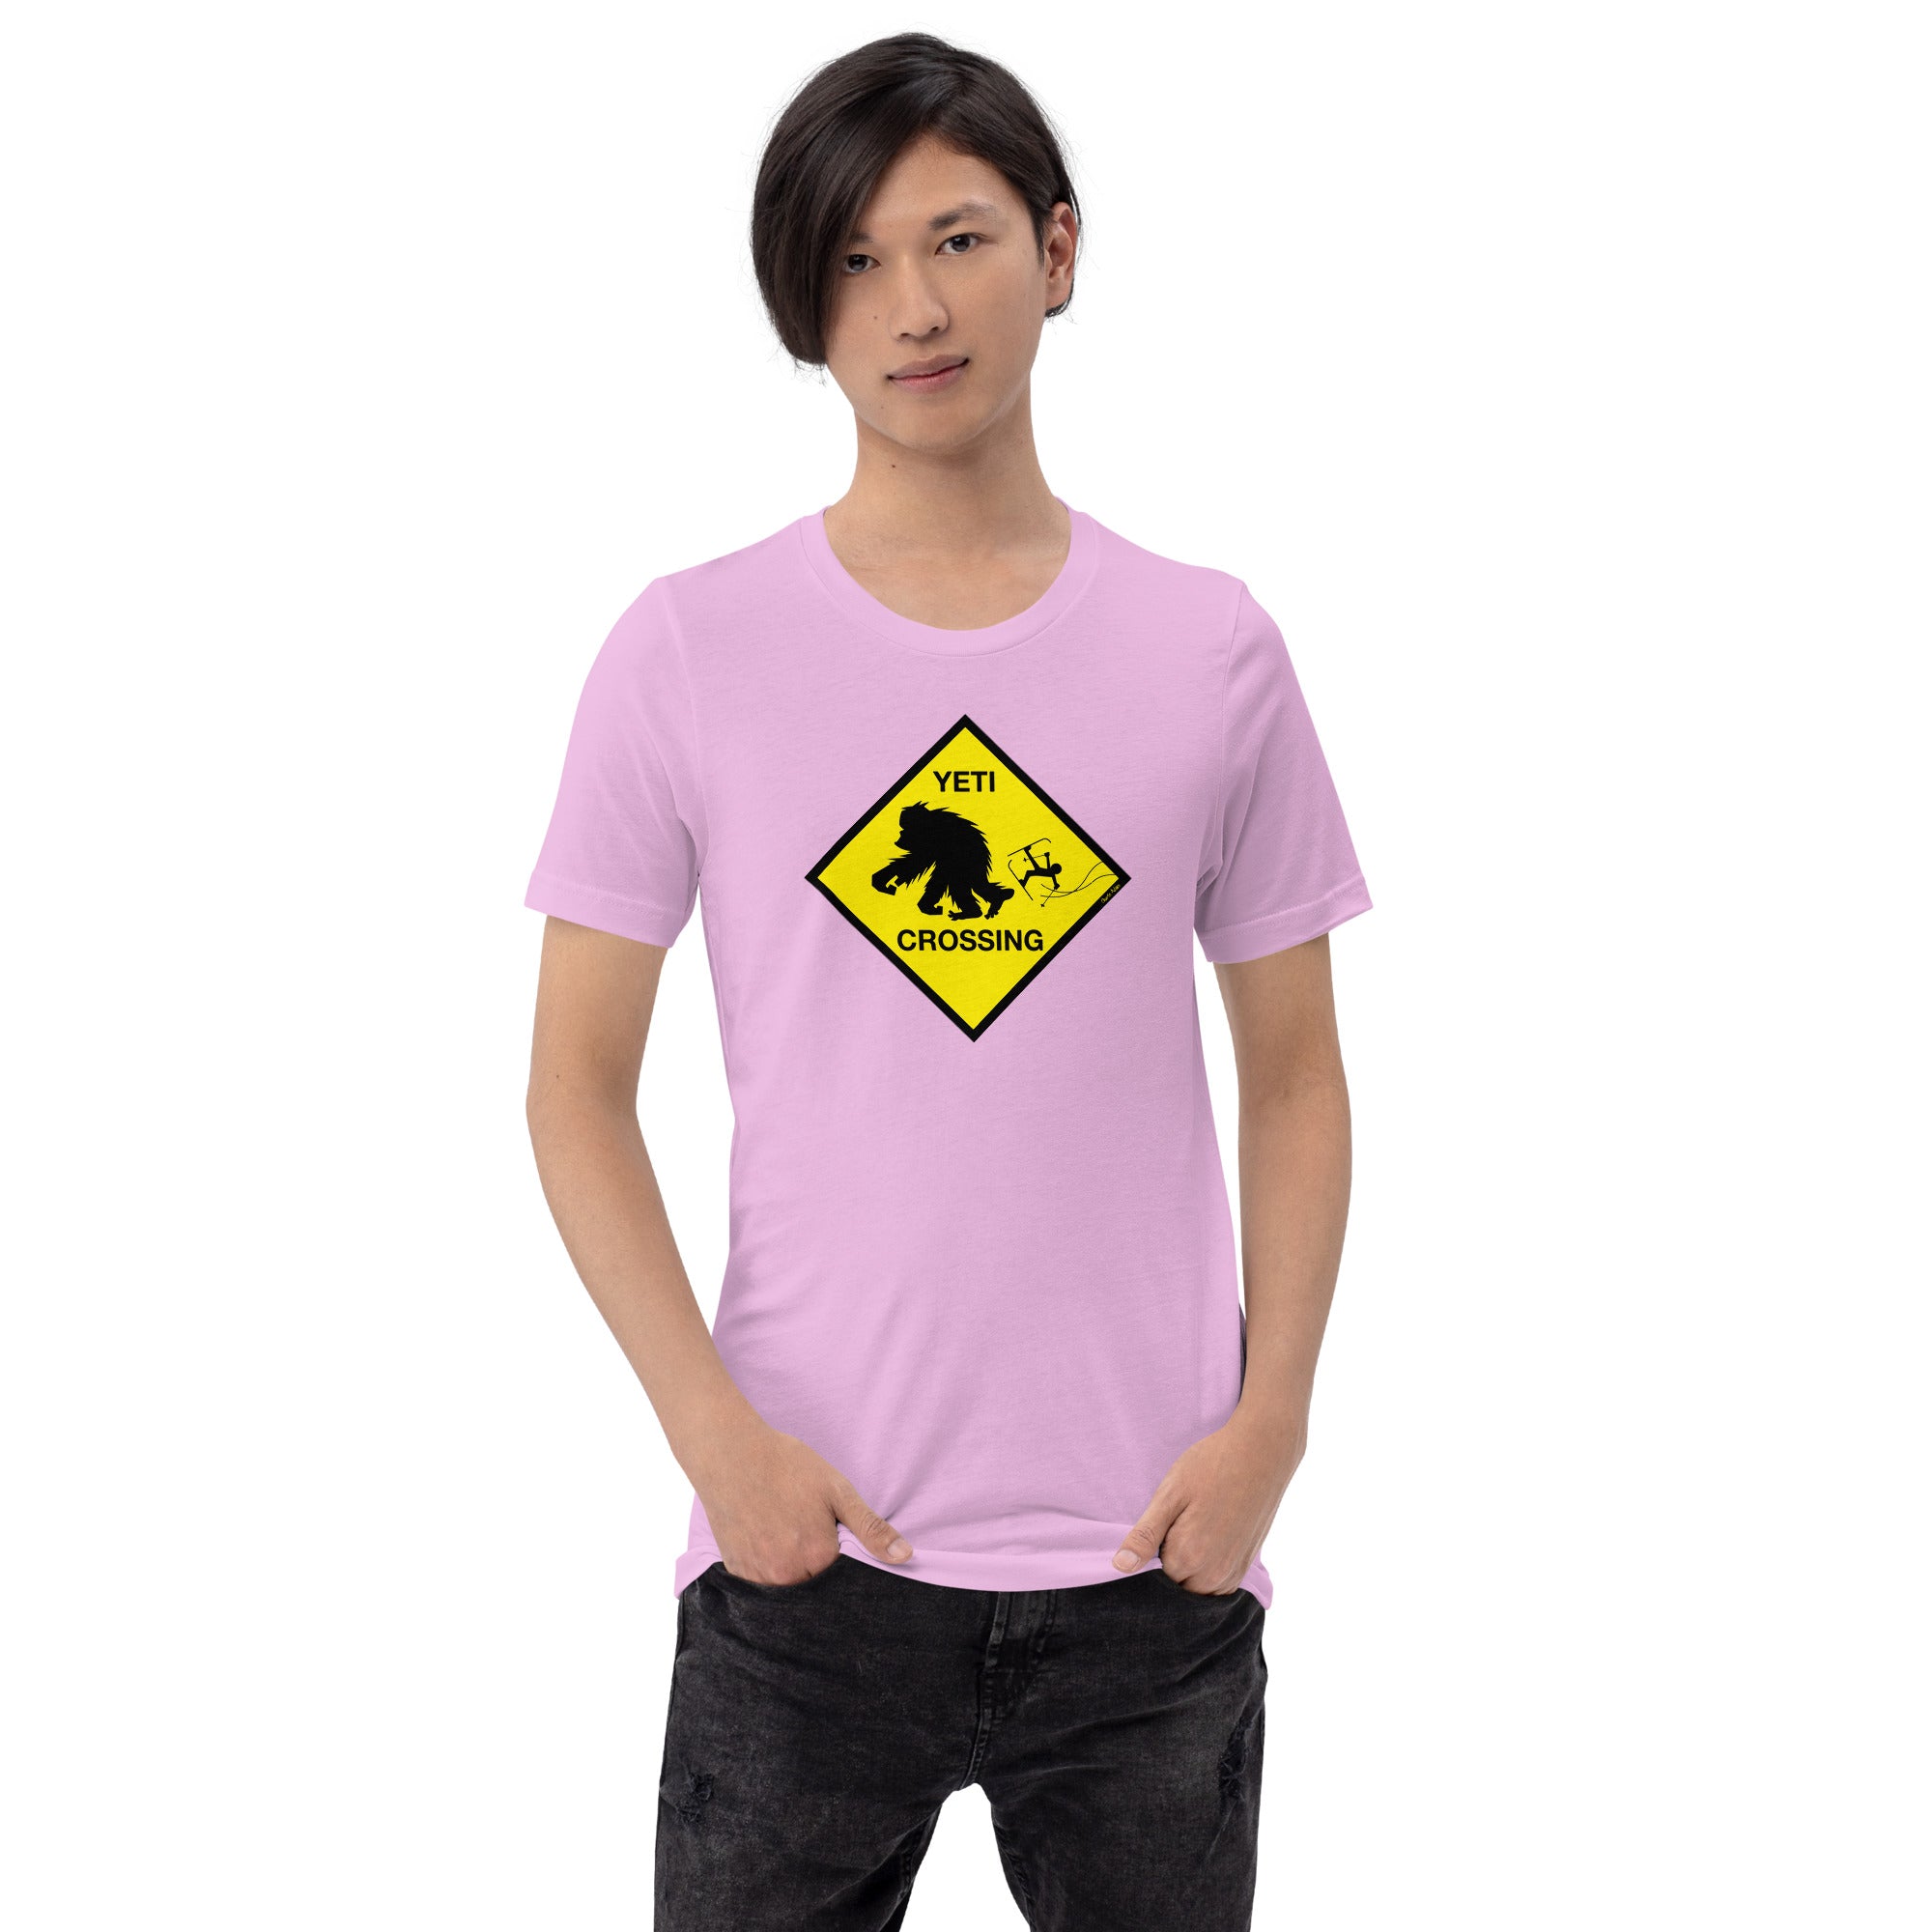 Unisex cotton t-shirt Yeti Crossing